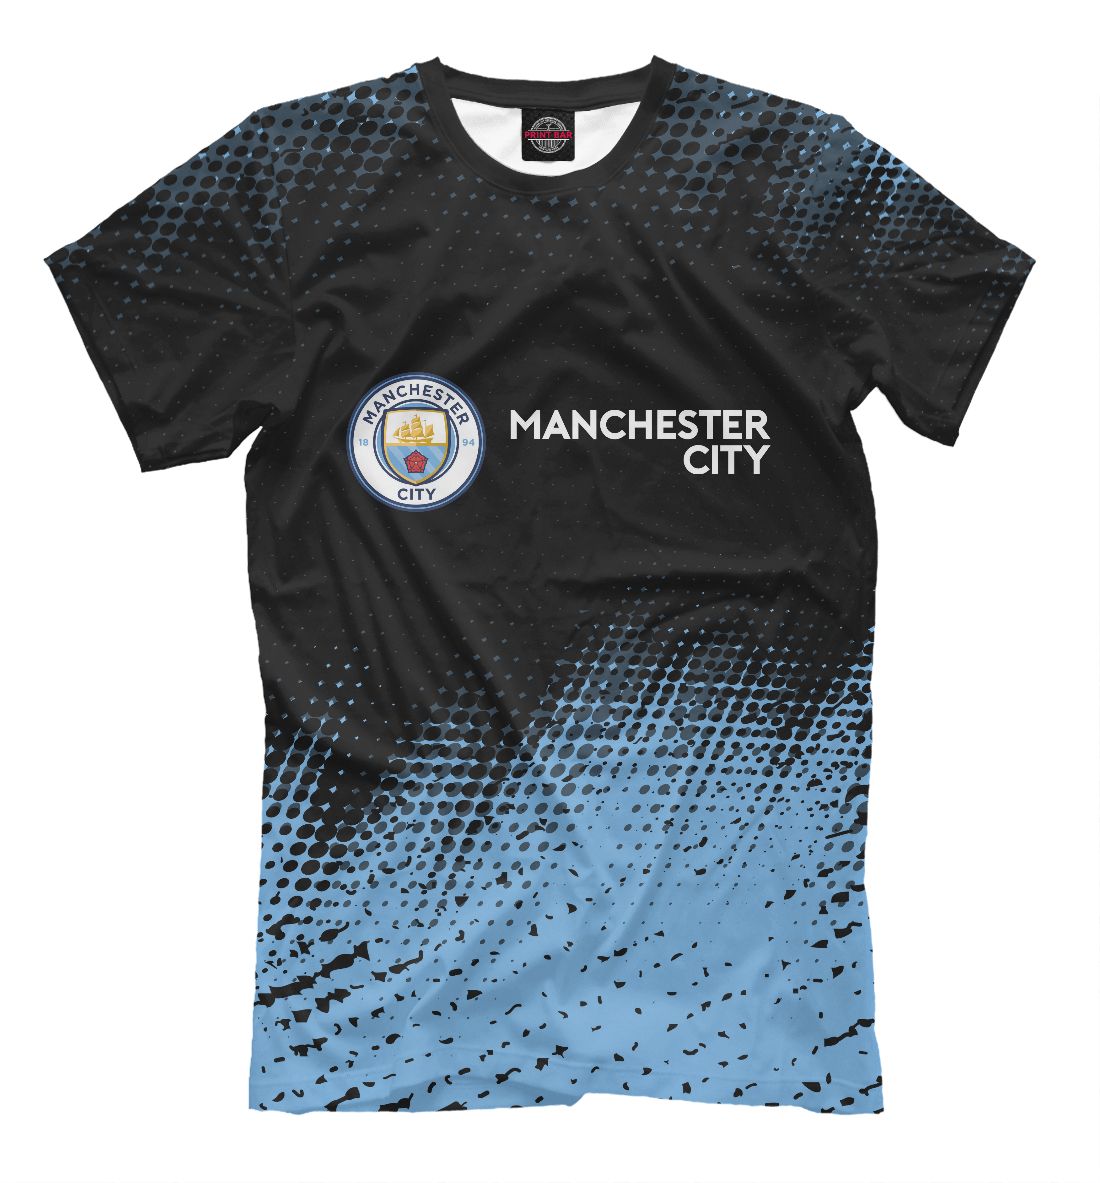 Футболка Manchester City для мальчиков, артикул: MNC-534545-fut-2mp